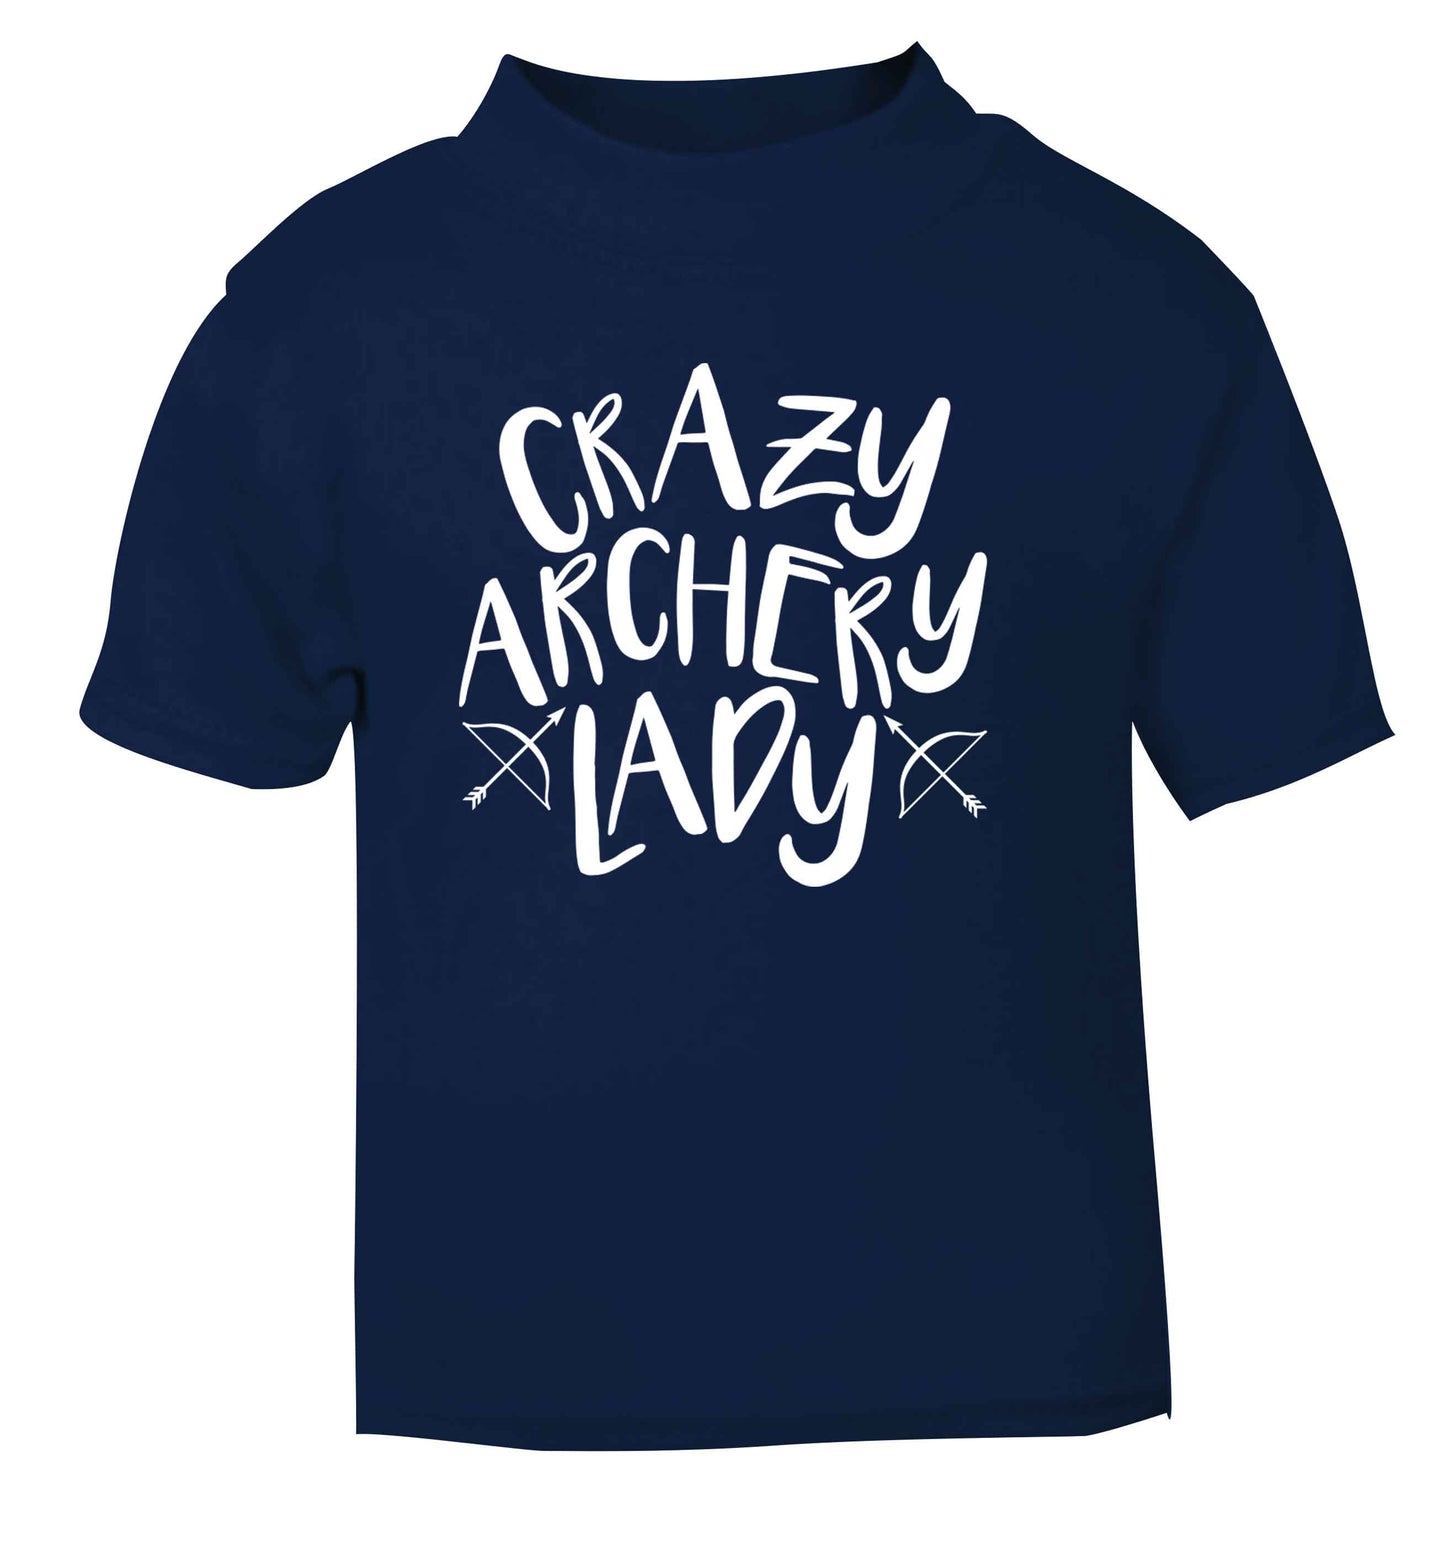 Crazy archery lady navy Baby Toddler Tshirt 2 Years